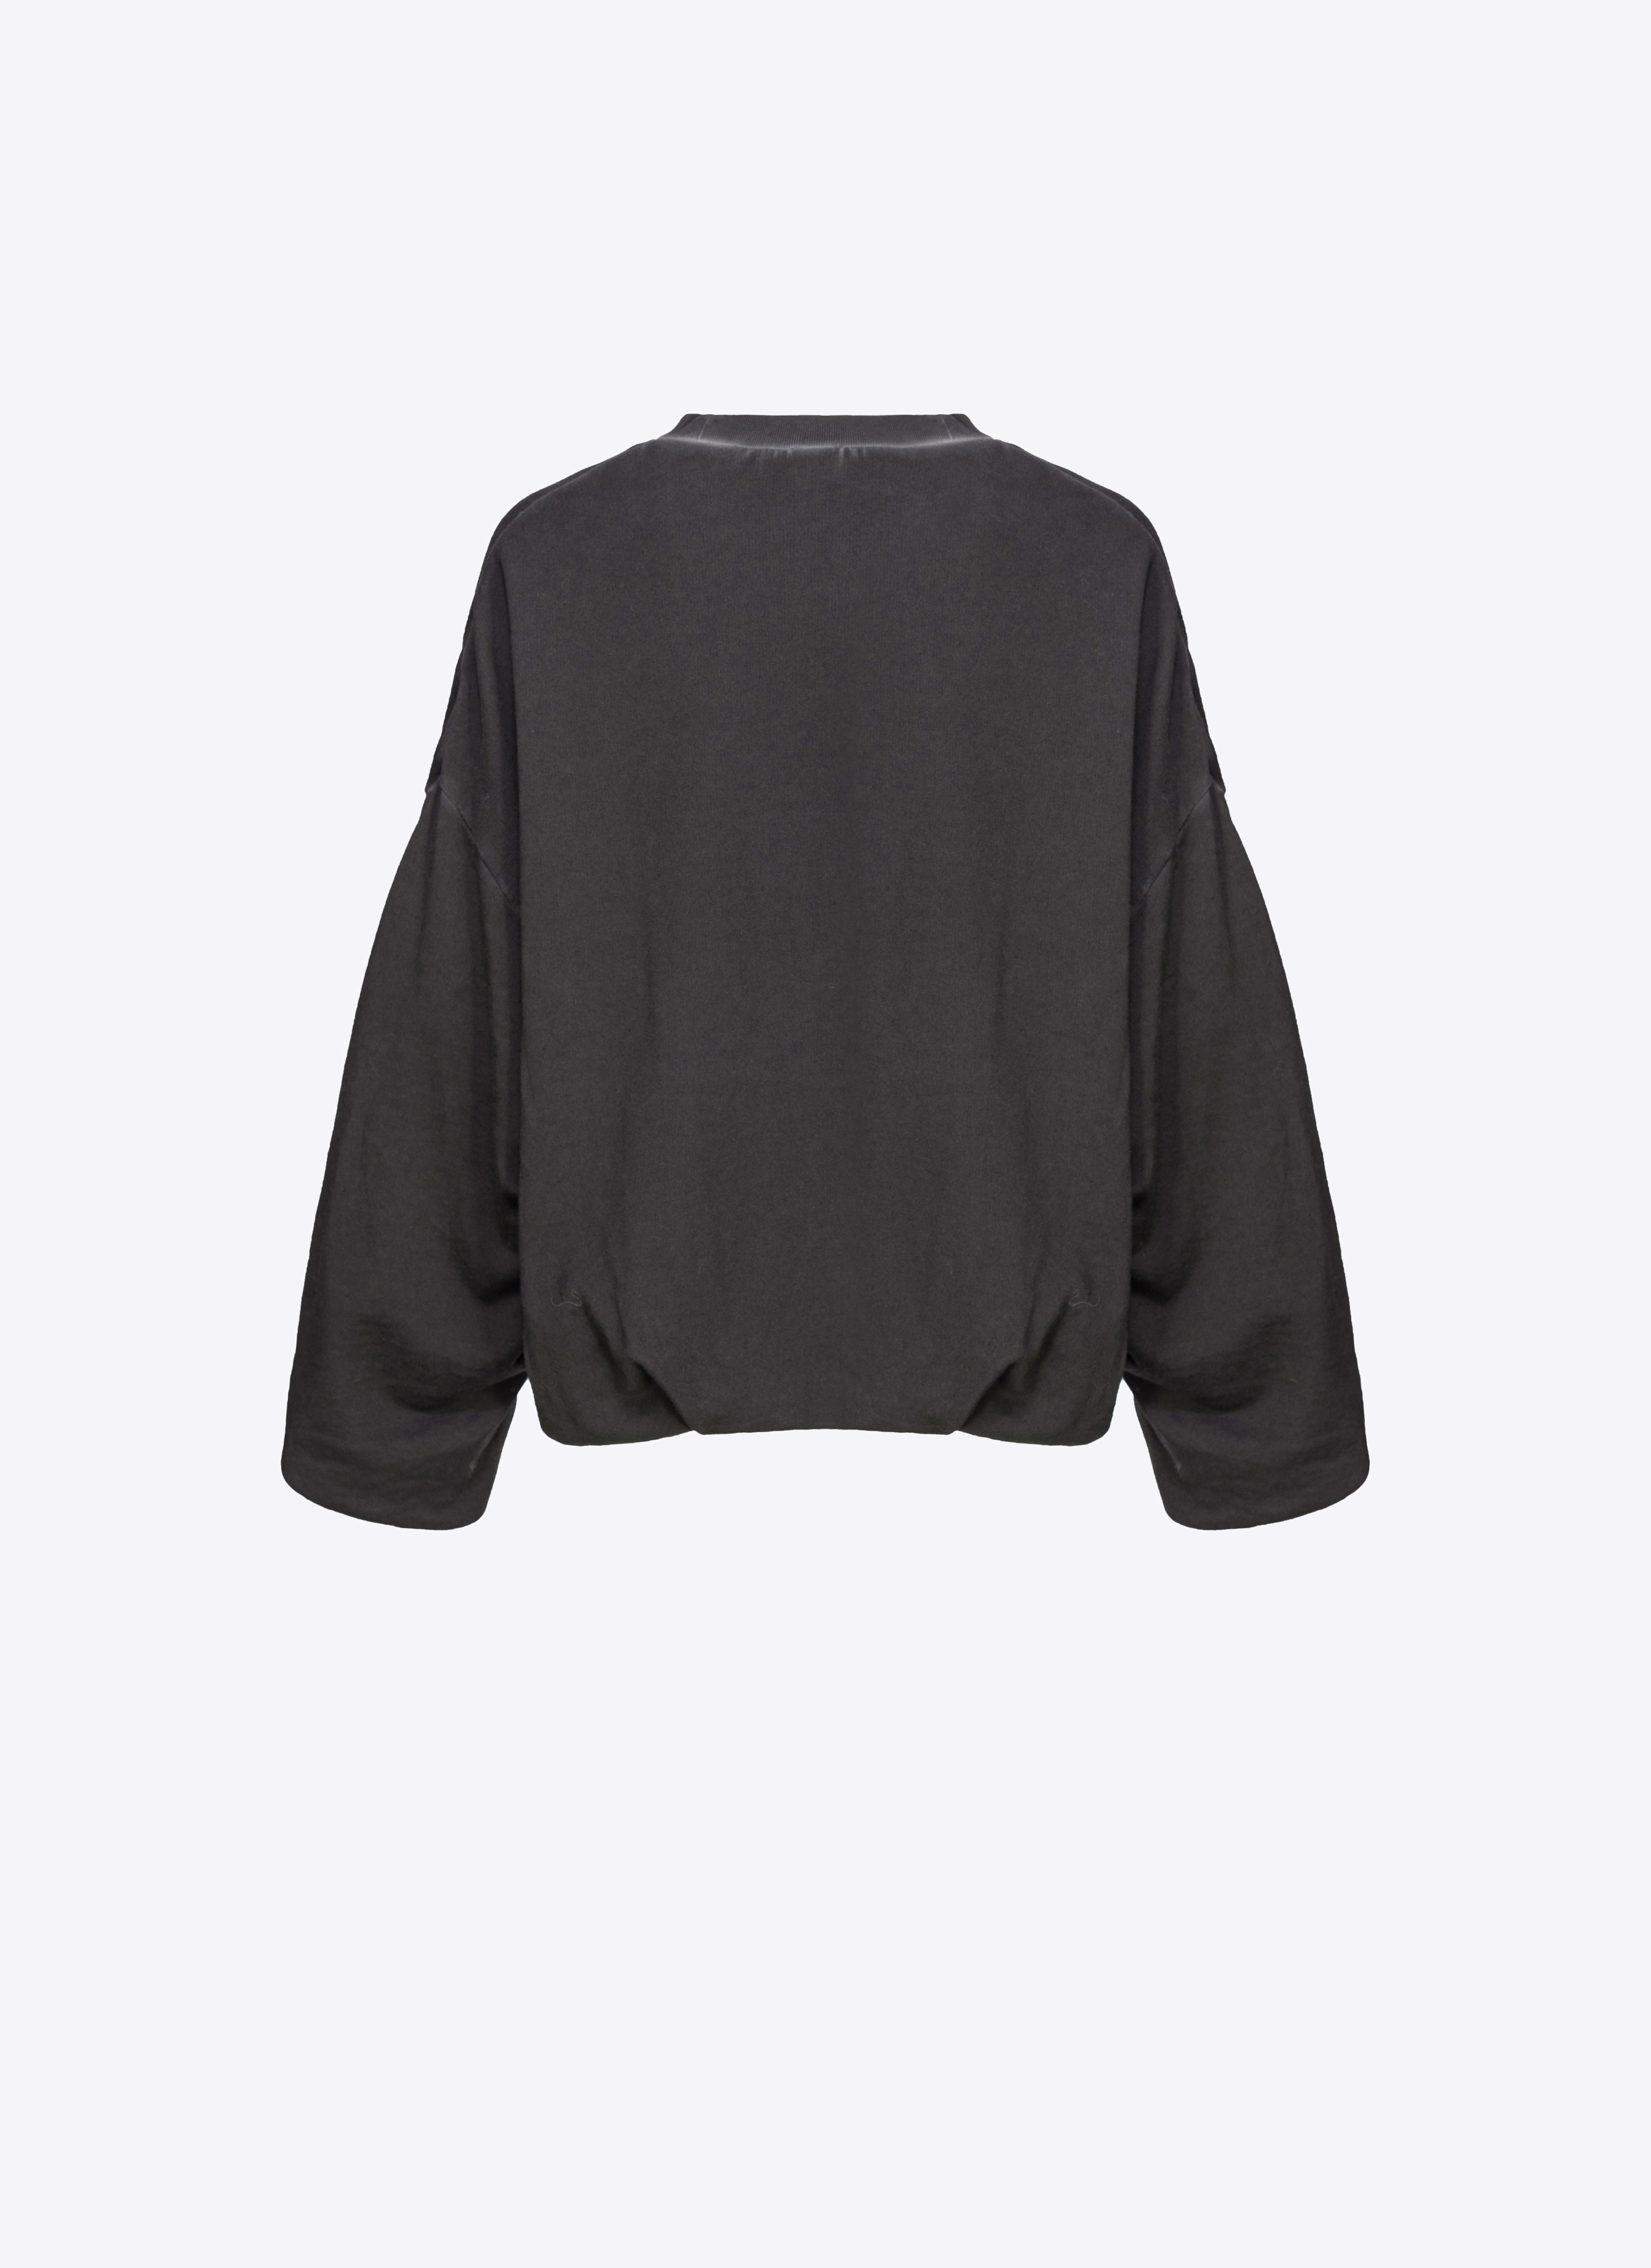 Pinko, Oversized sweatshirt with logo print, Limo black, M-L